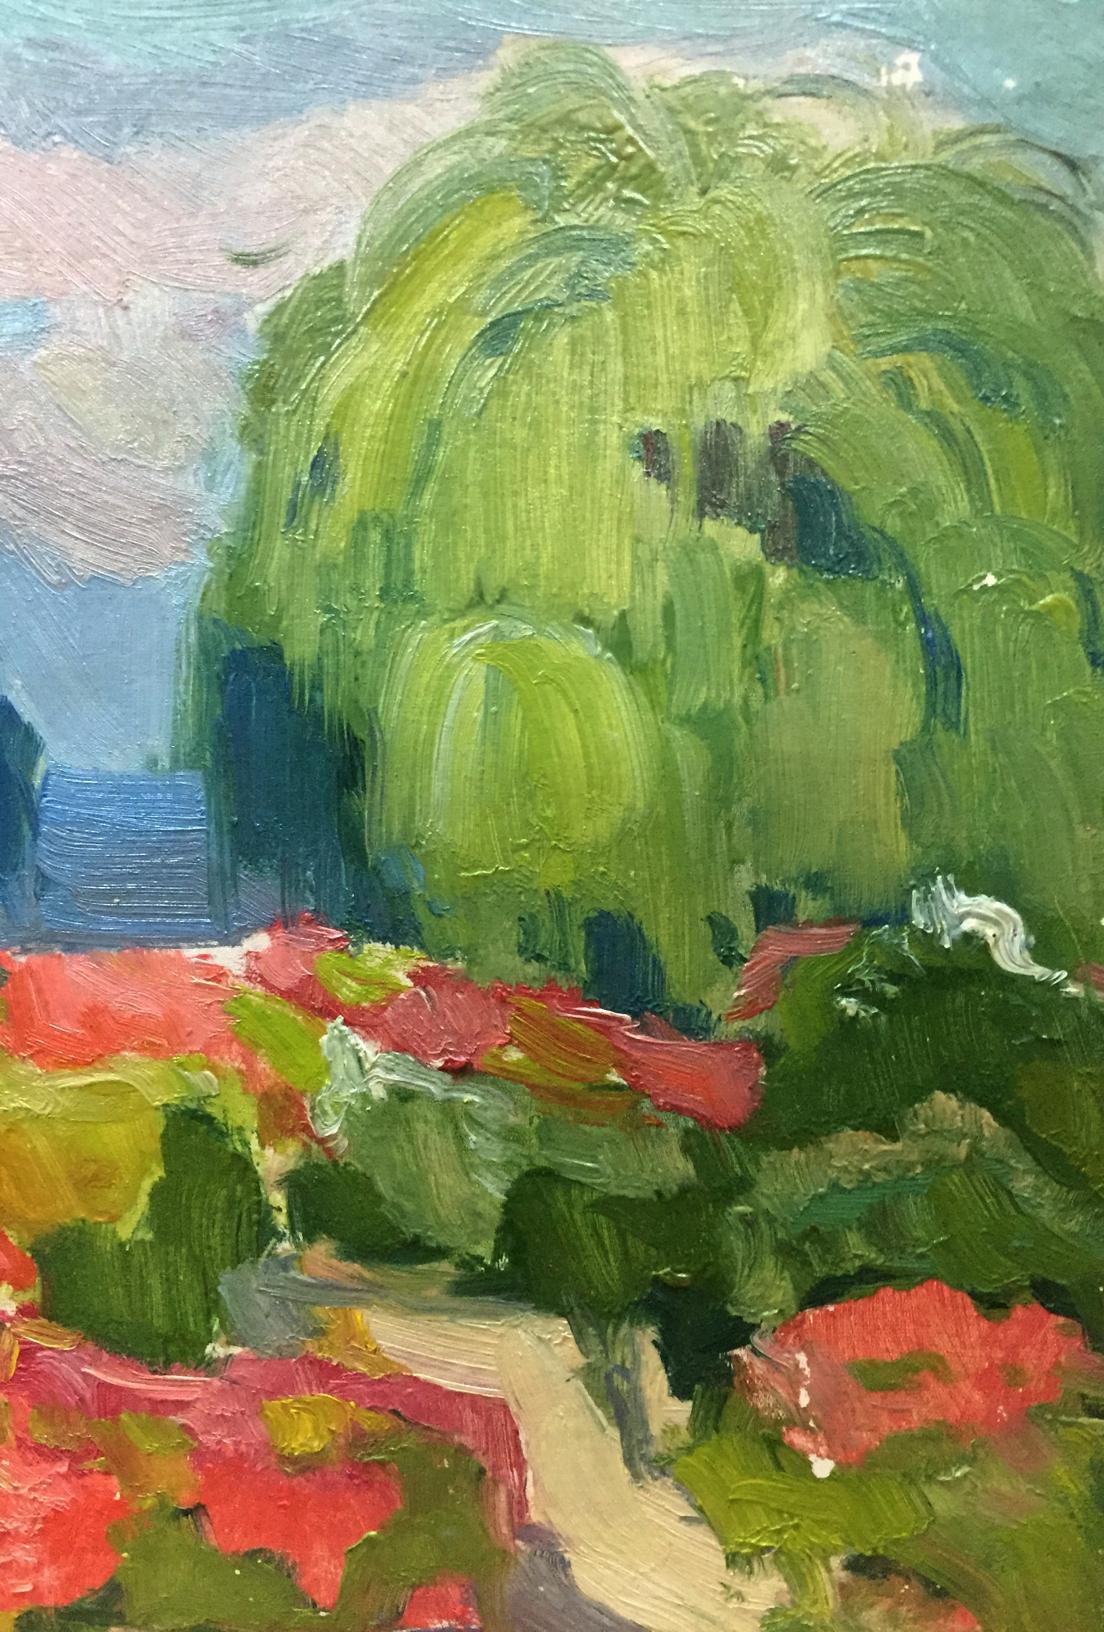 Buryachok Nikolai Ivanovich's oil painting portrays weeping willows